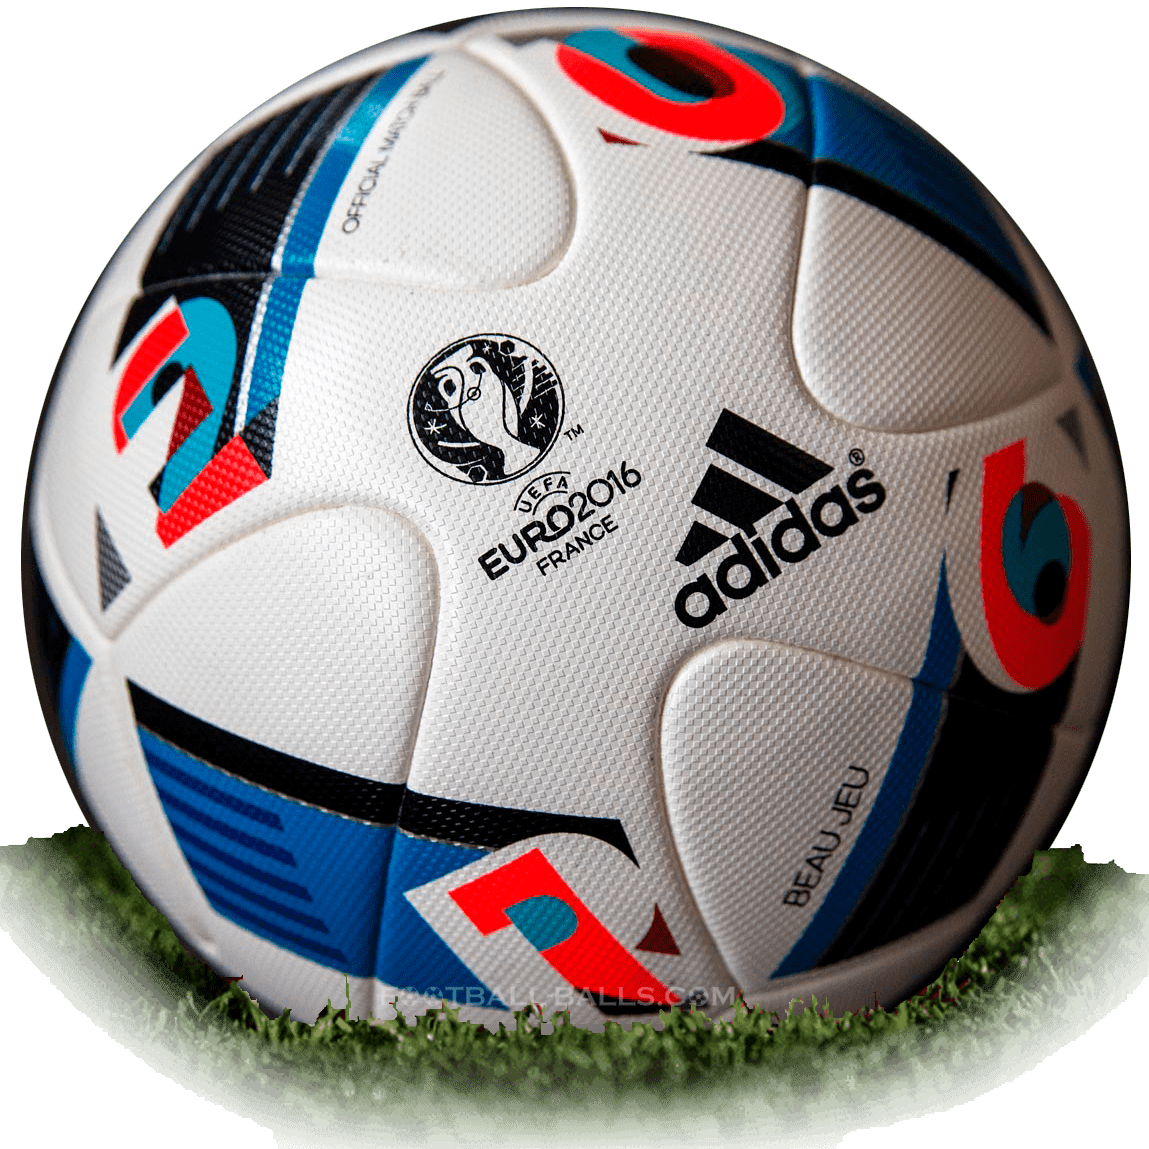 Beau Jeu is official match ball of Euro Cup 2016 | Football Balls Database